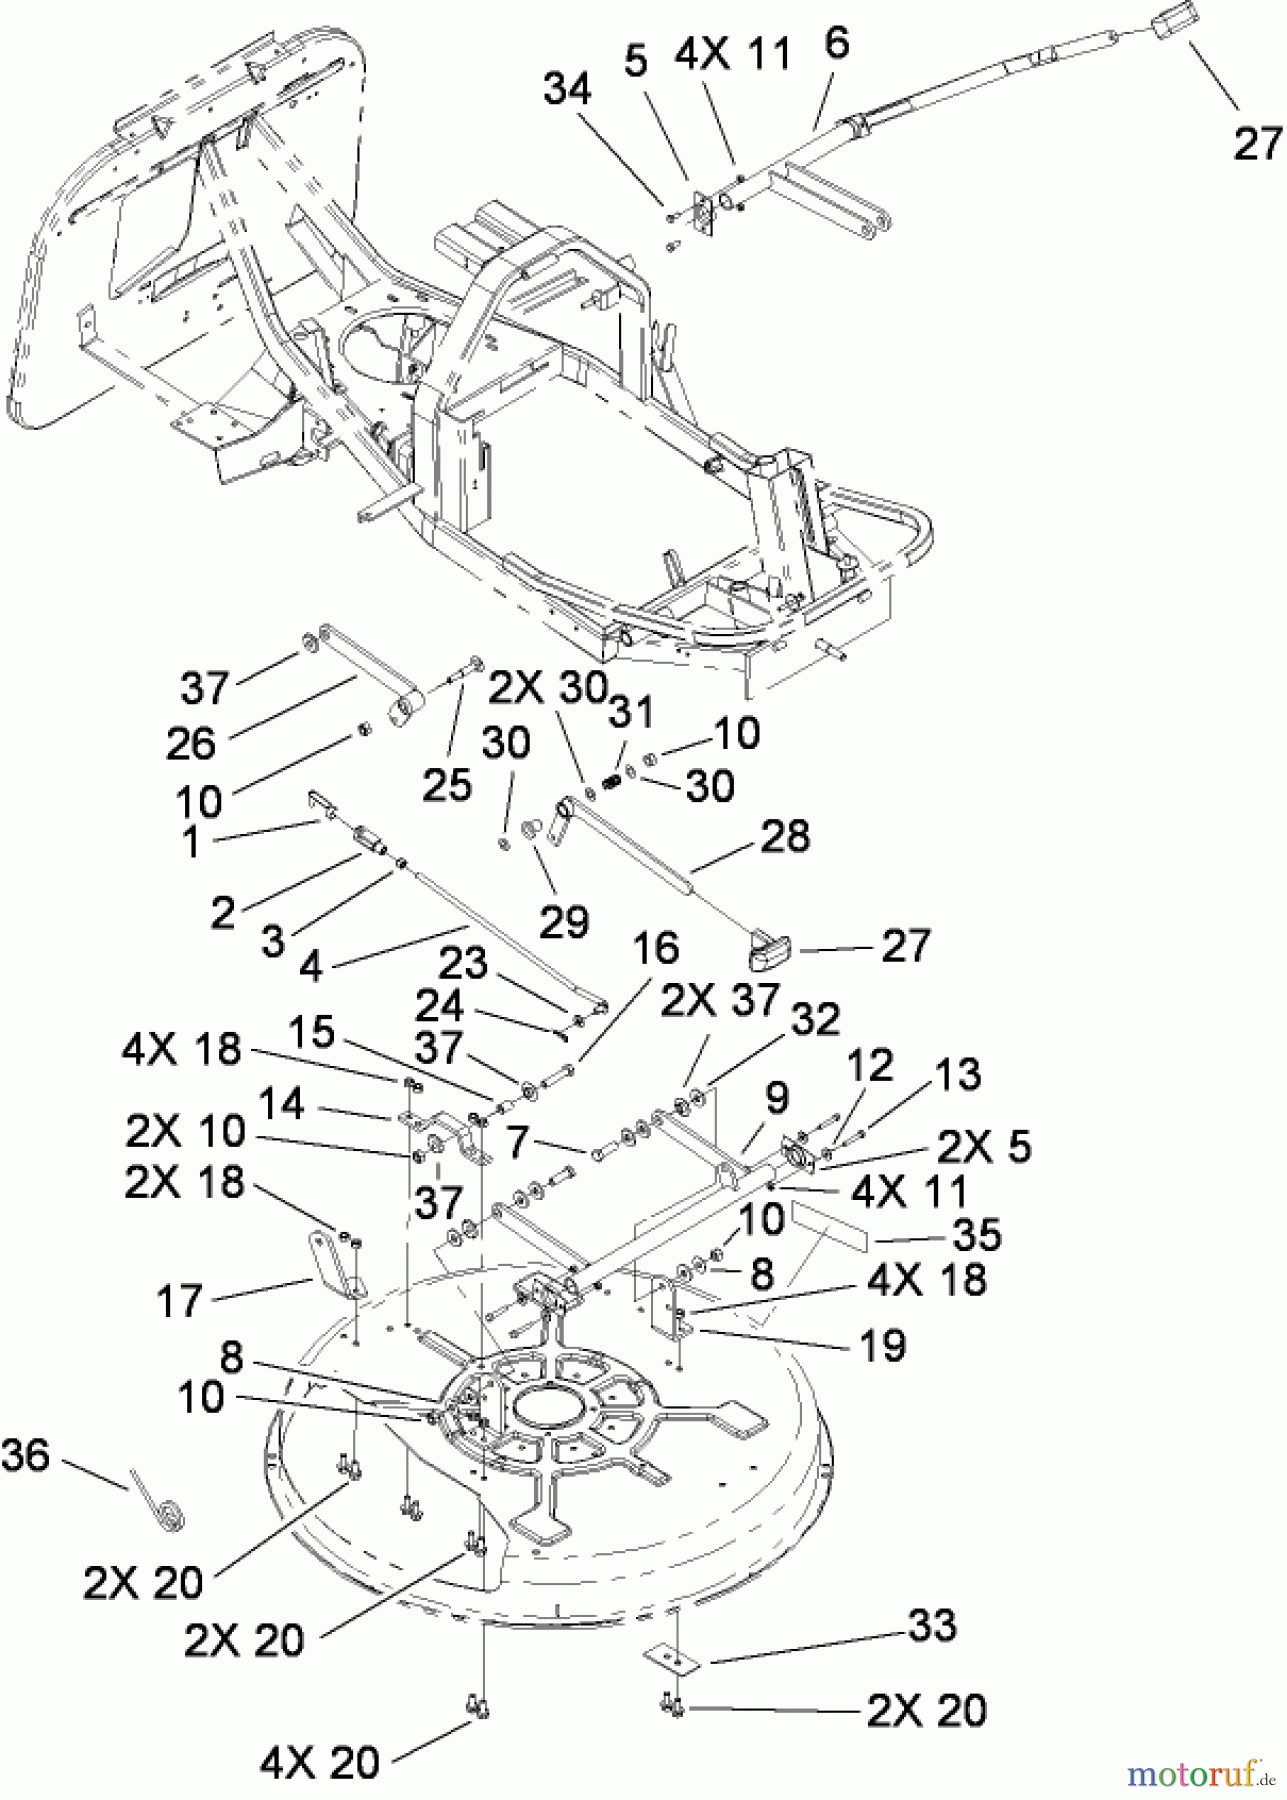  Toro Neu Mowers, Rear-Engine Rider 70185 (G132) - Toro G132 Rear-Engine Riding Mower, 2009 (280899565-290999999) DECK SUSPENSION ASSEMBLY